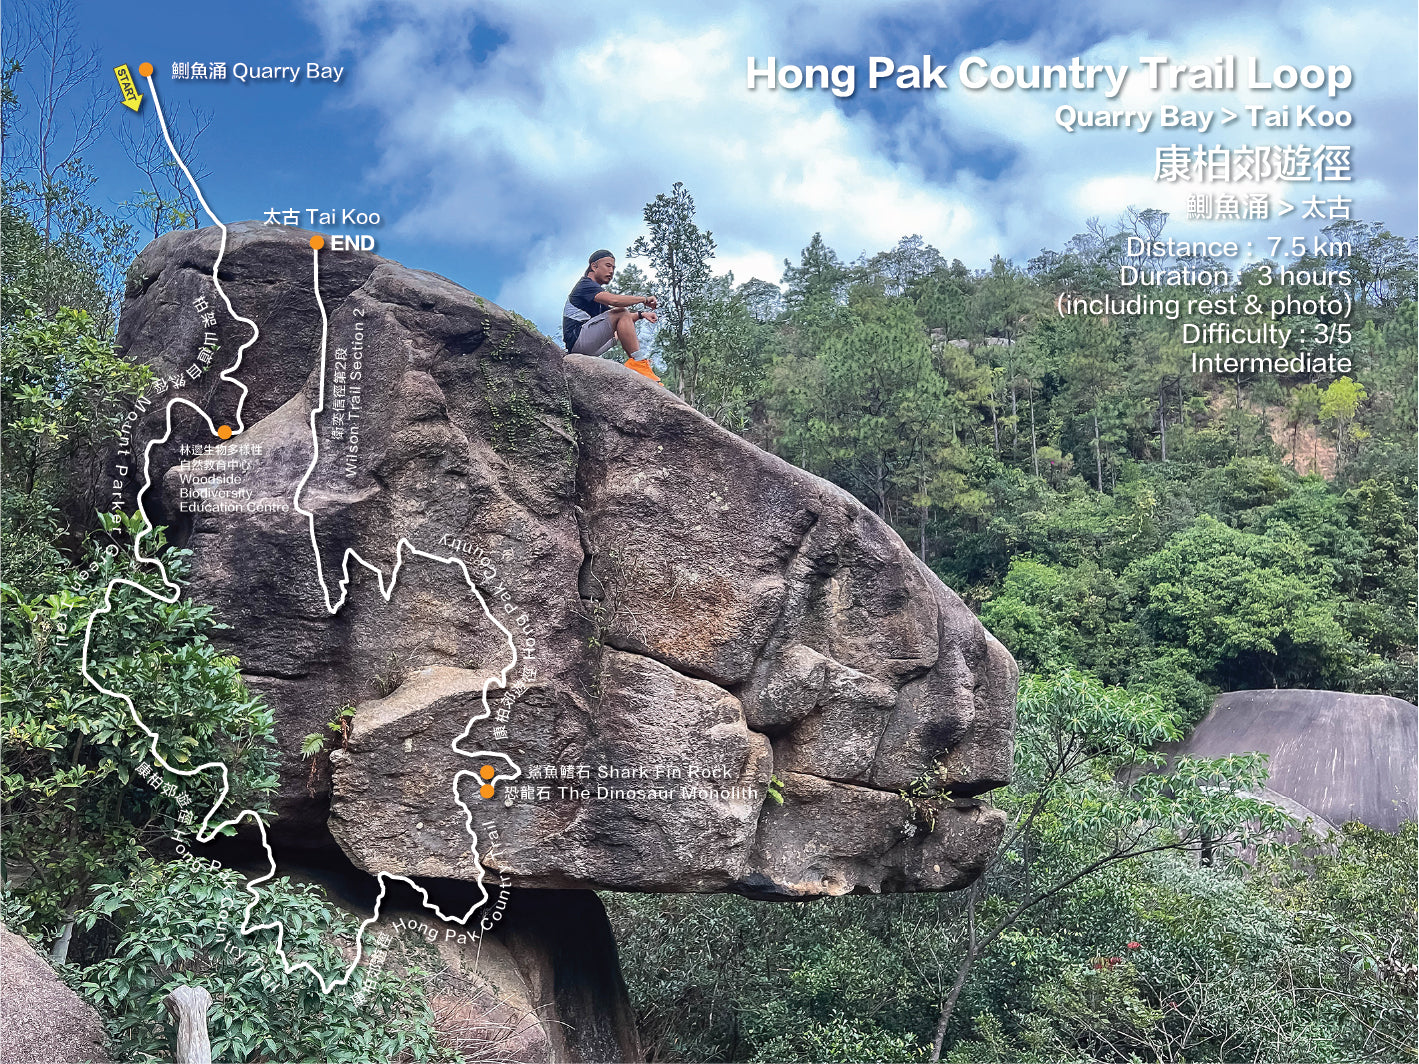 Hong Pak Country Trail Loop | Quarry Bay to Tai Koo